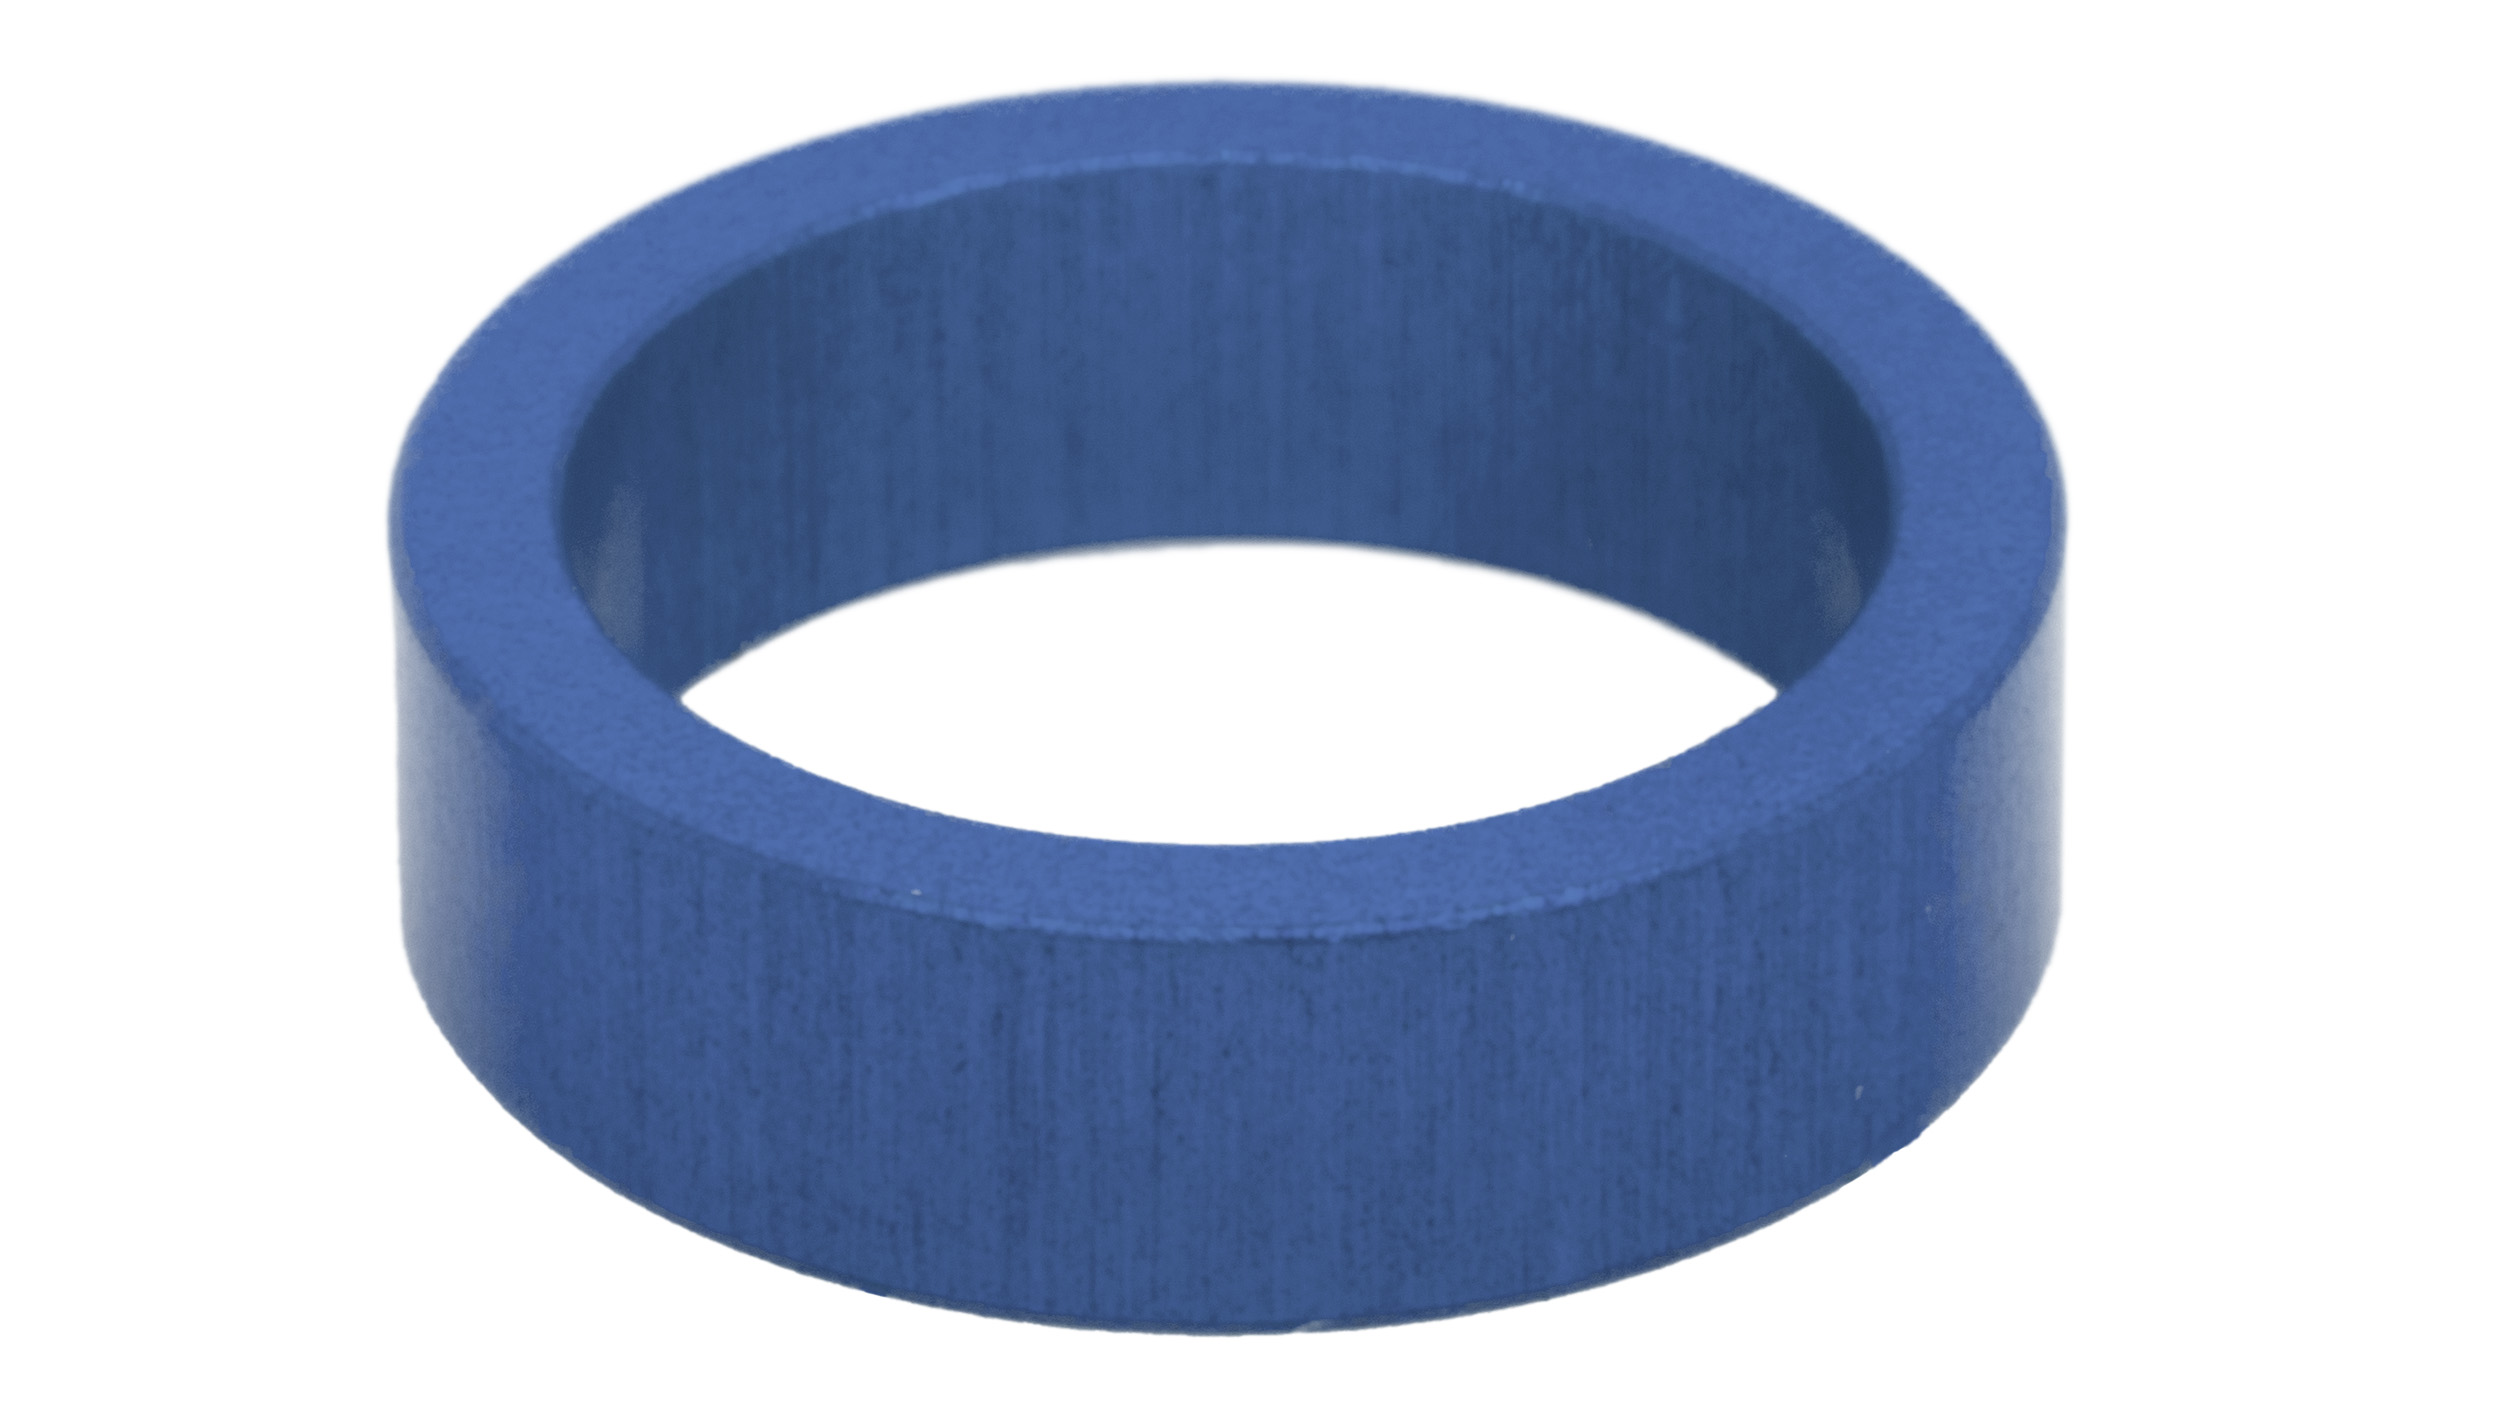 Identifikationsring, dunkelblau, für Petitpierre TSE, Klinge 2,5 mm